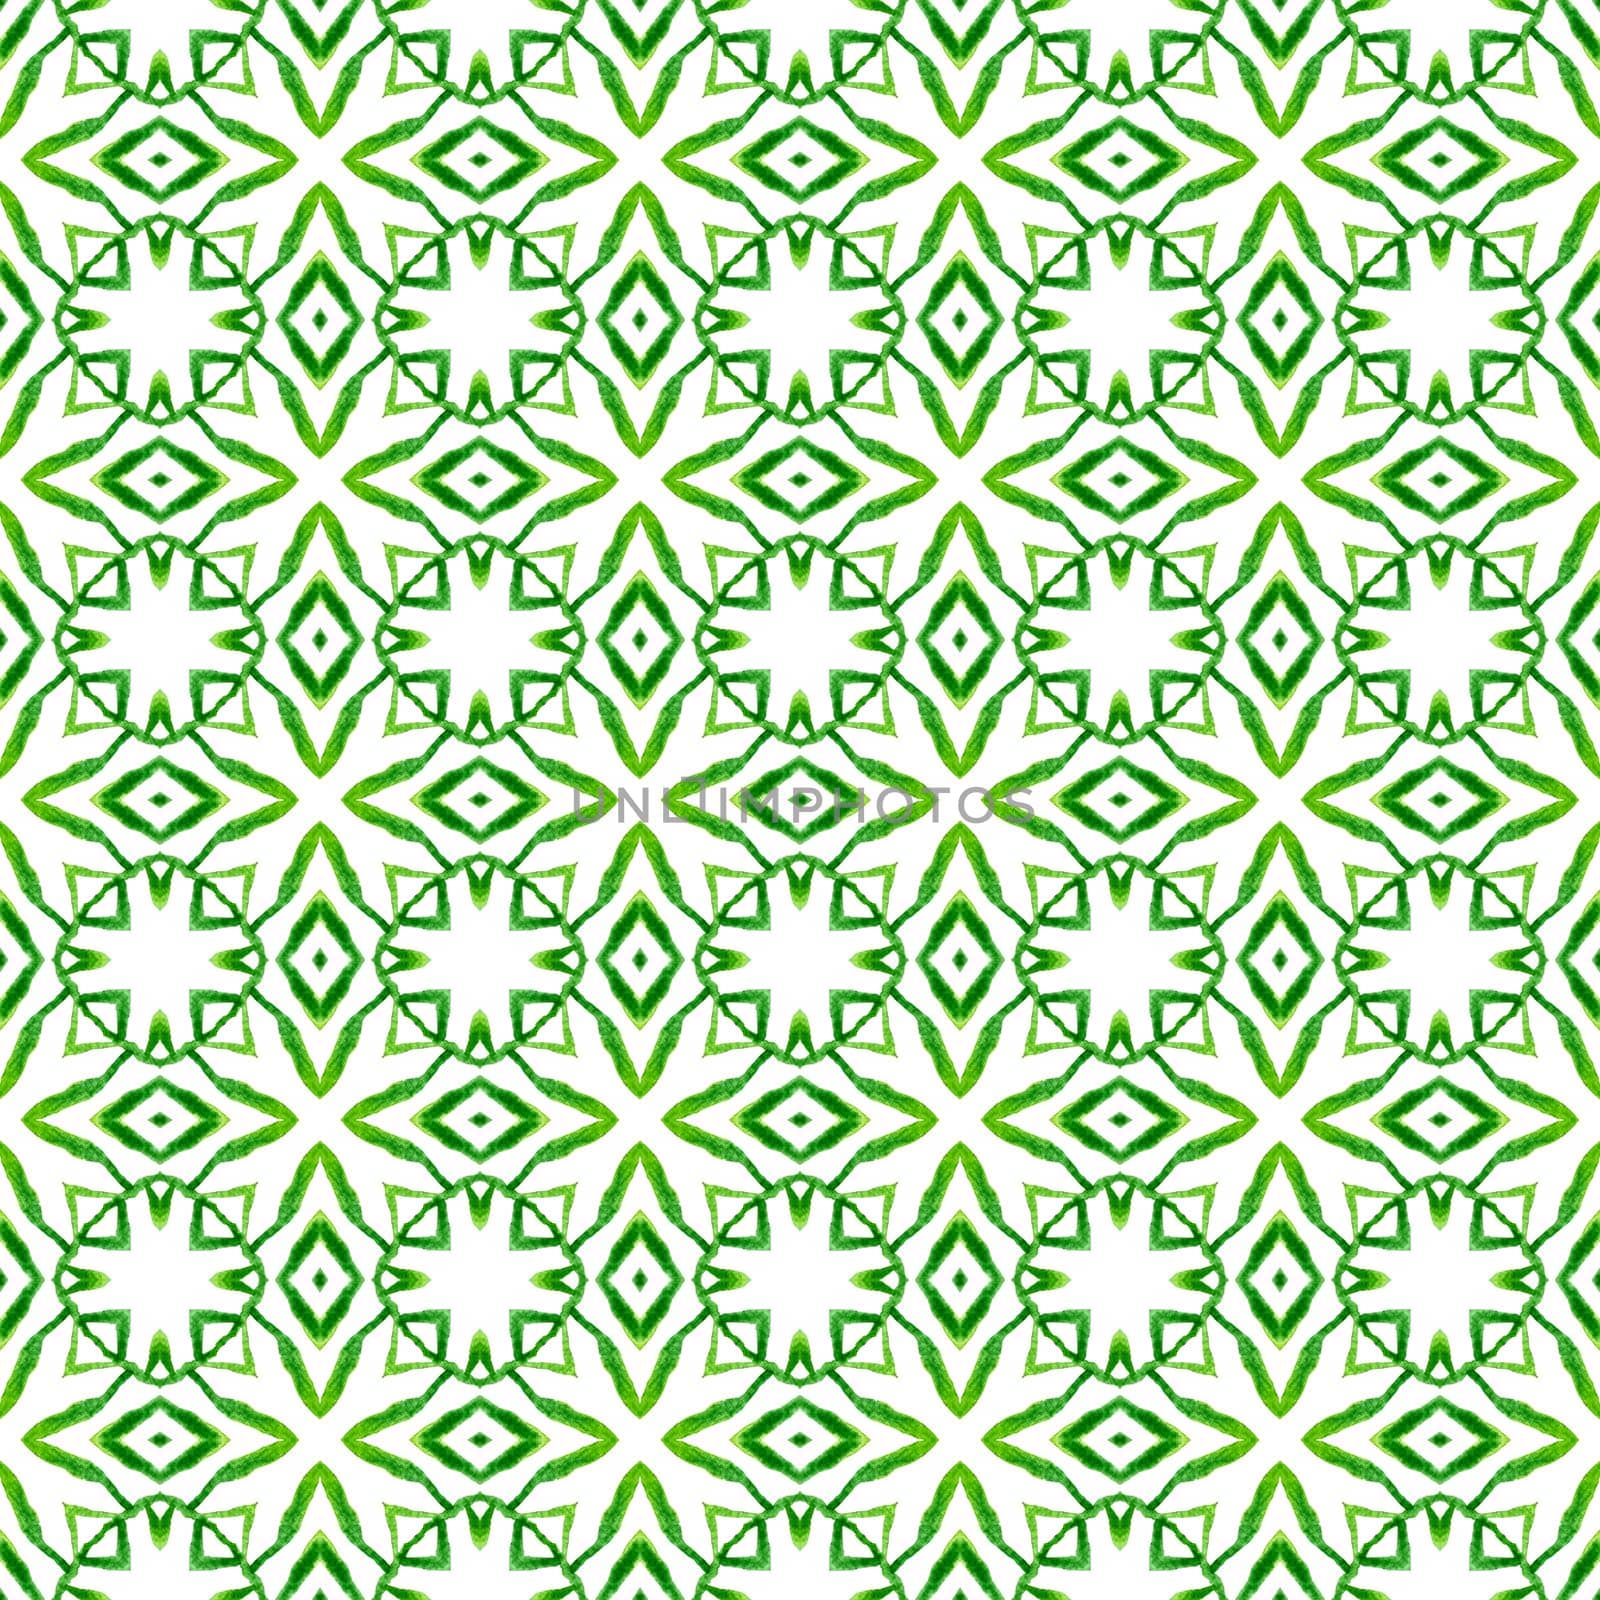 Chevron watercolor pattern. Green emotional boho by beginagain